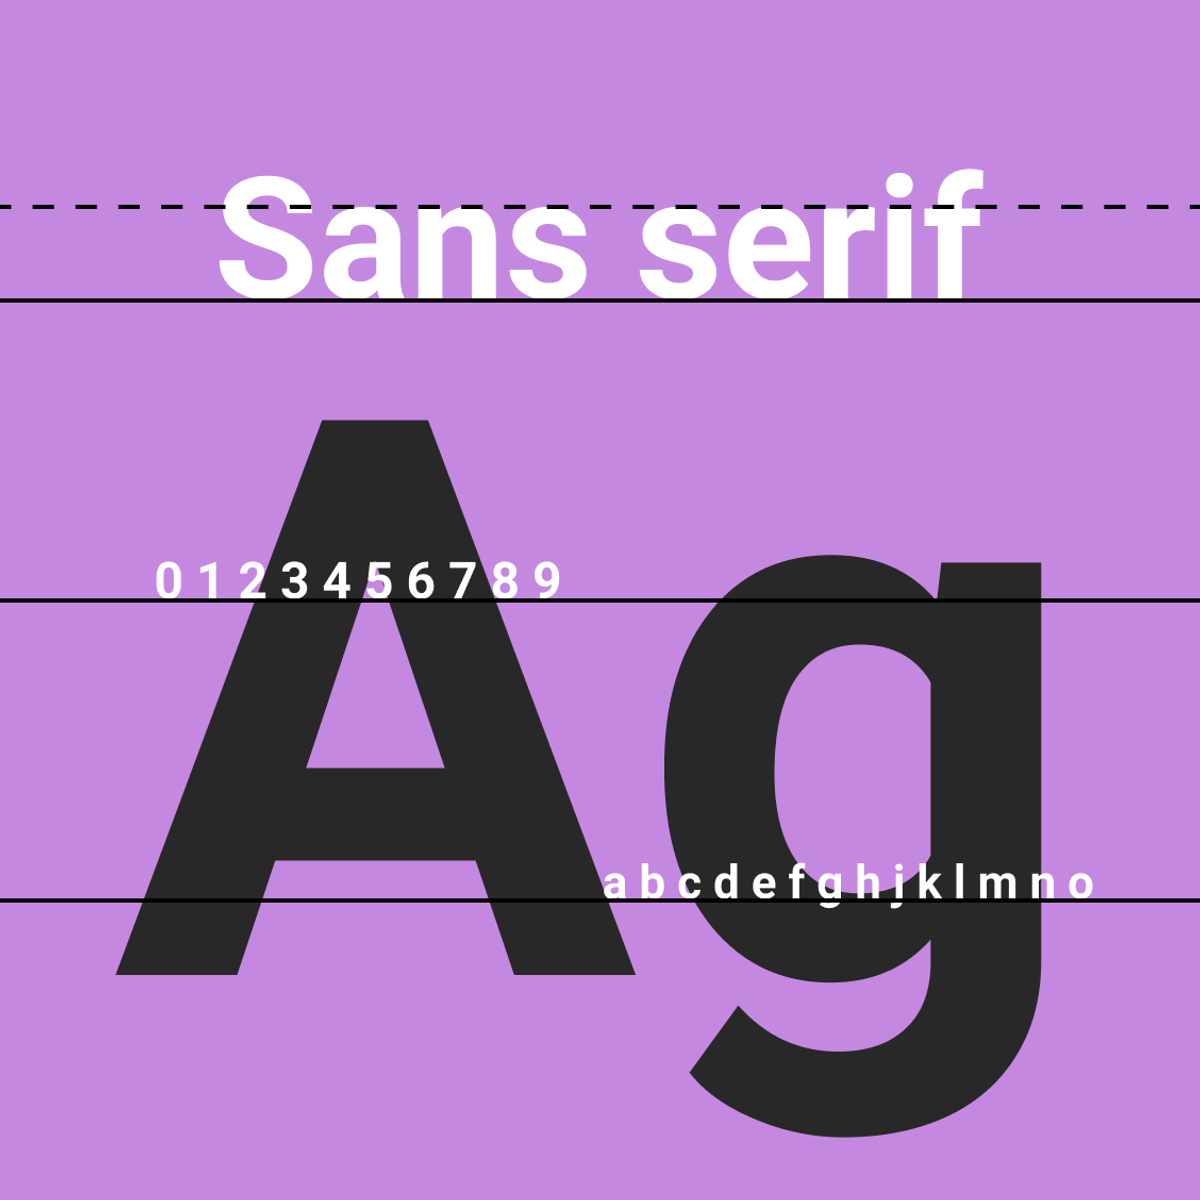 Serif vs. Sans for Text in Print